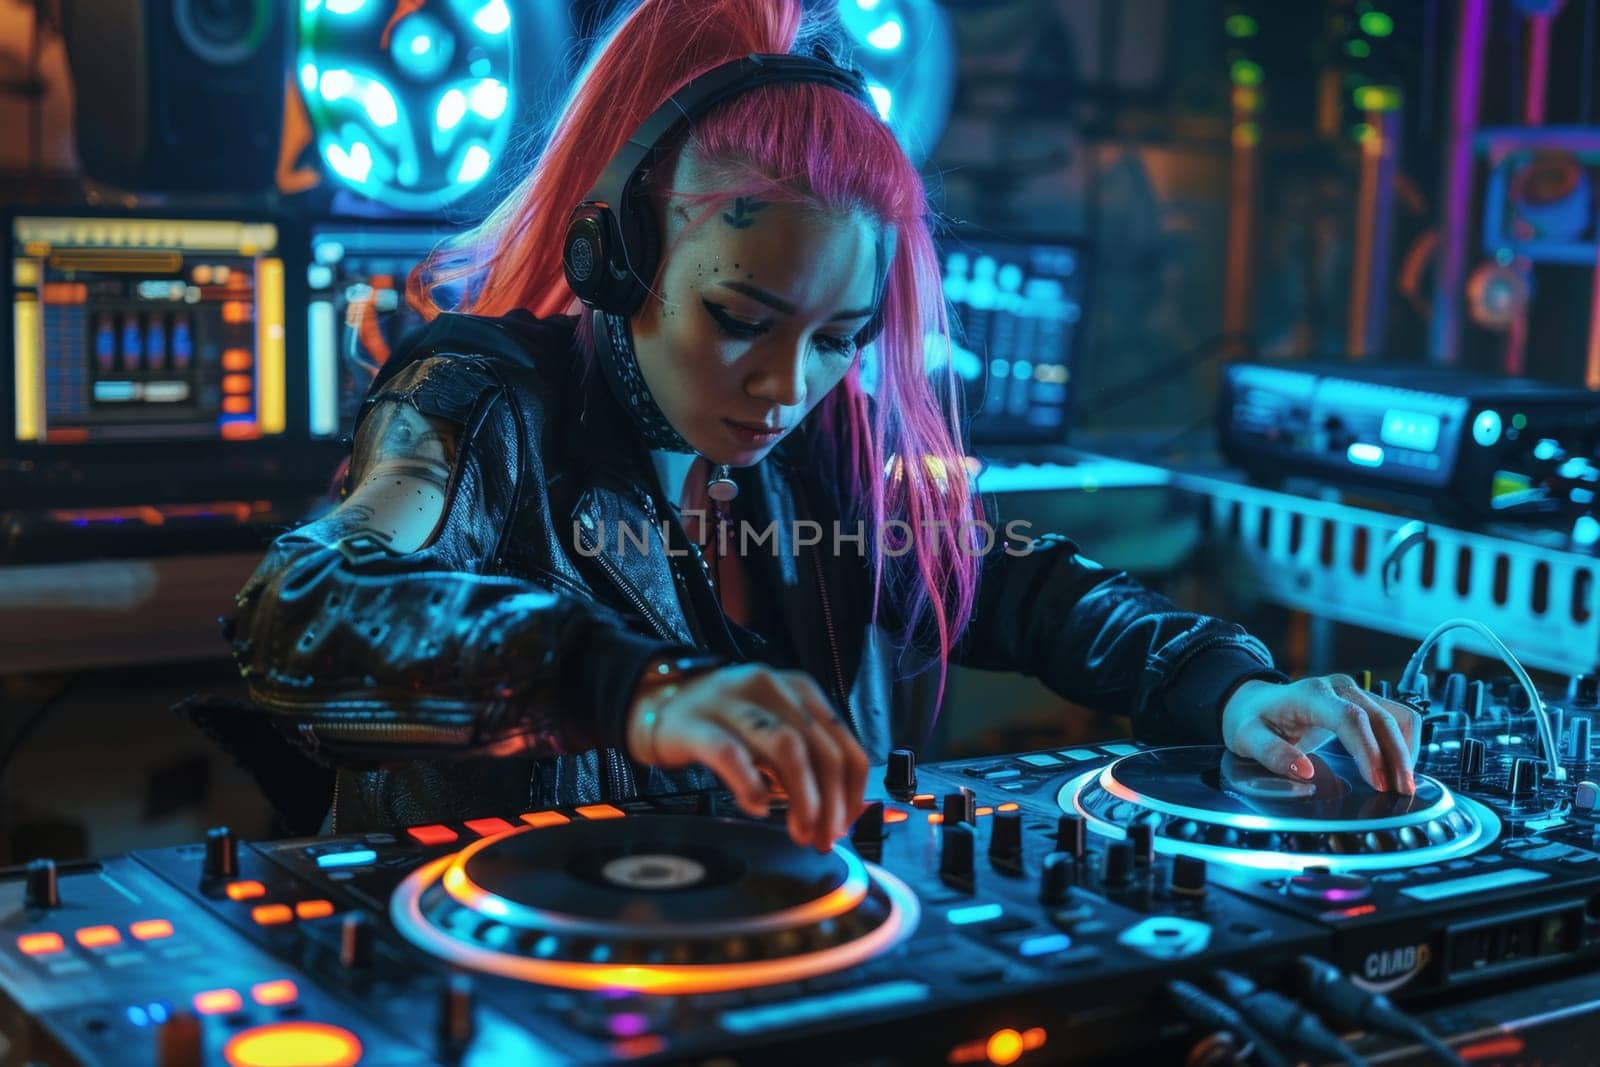 Cyberpunk DJ girl playing music in a nightclub by papatonic